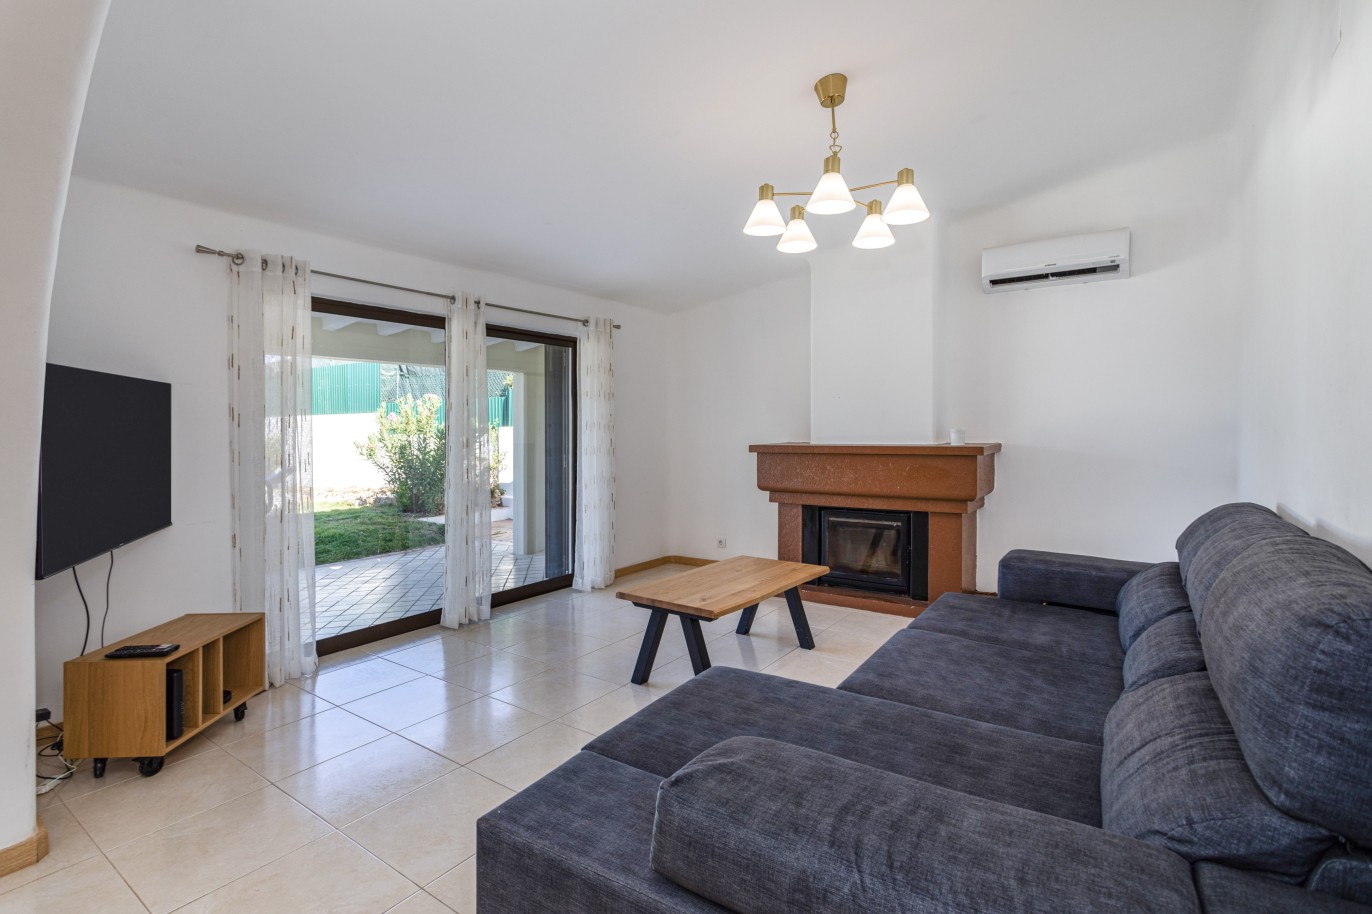 4 bedroom villa with pool, for sale in Albufeira, Algarve_233593